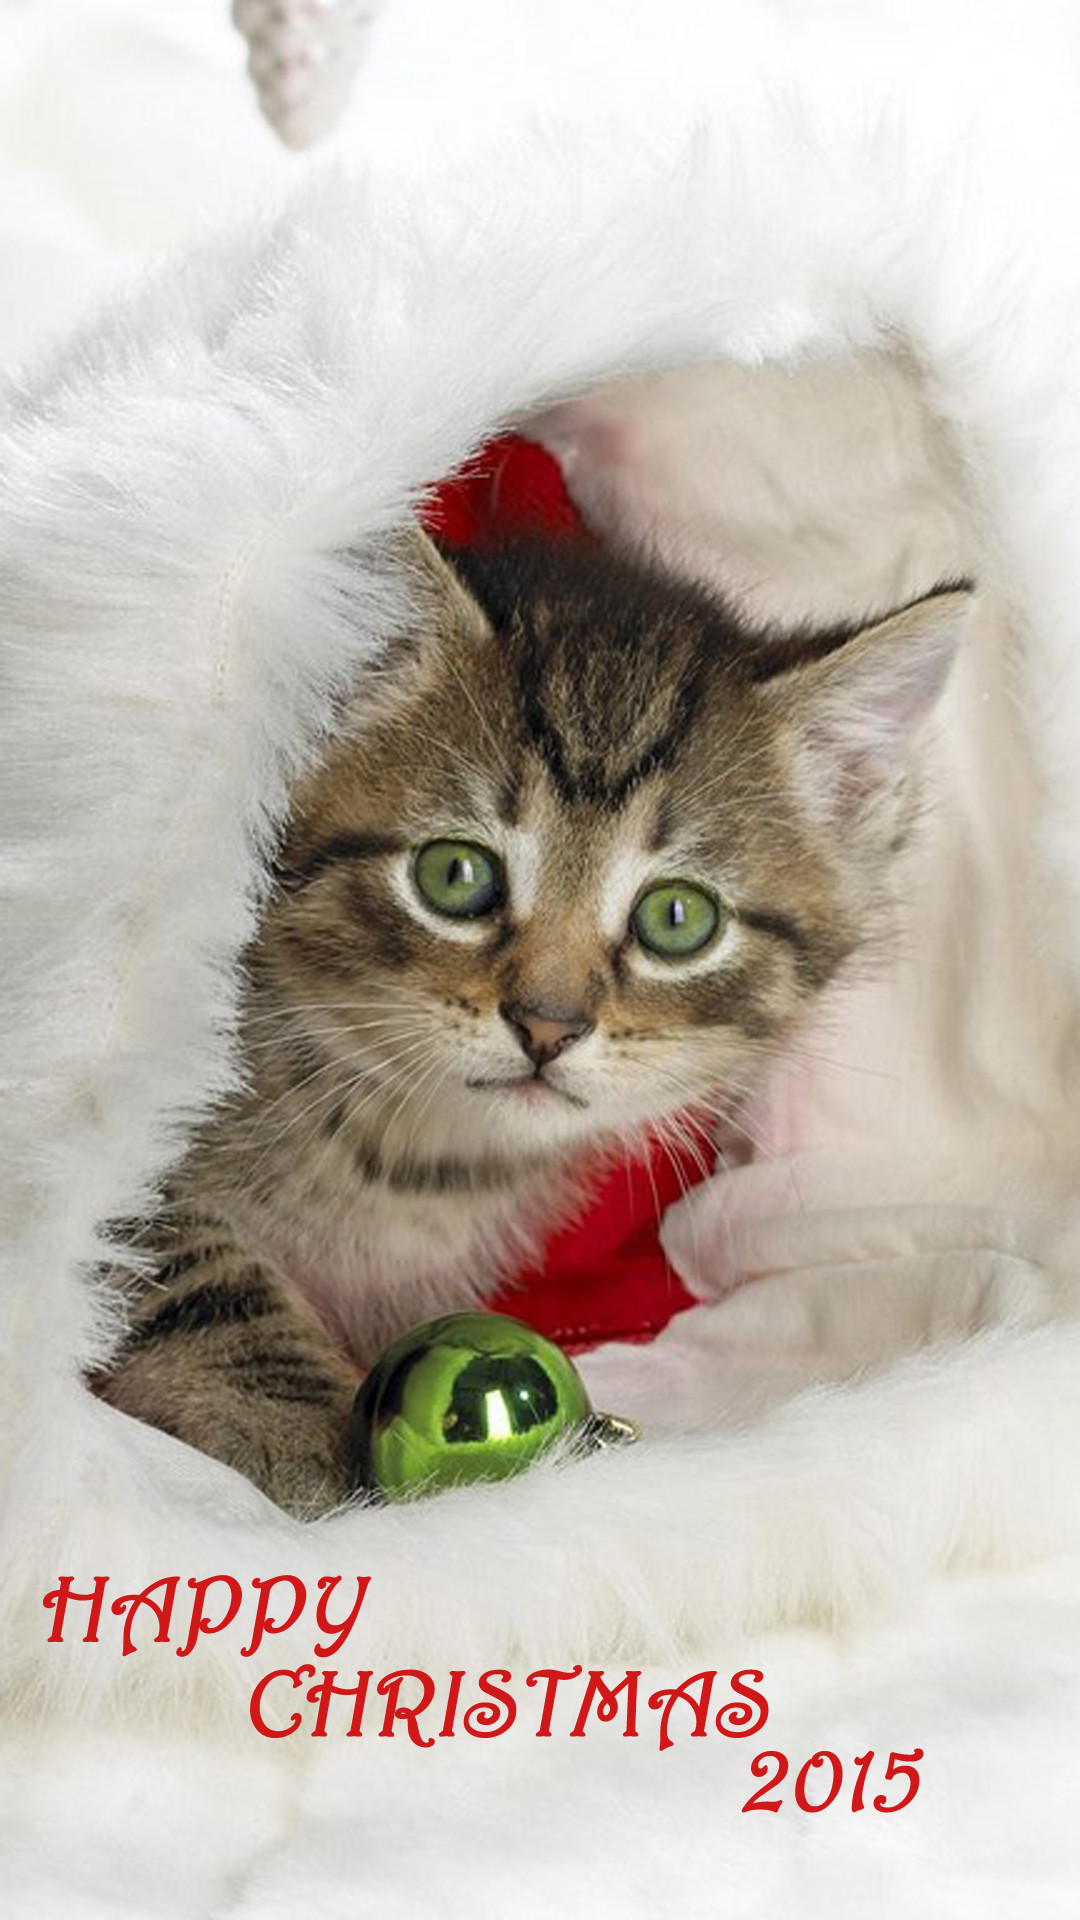 Cute Kitten With Bell